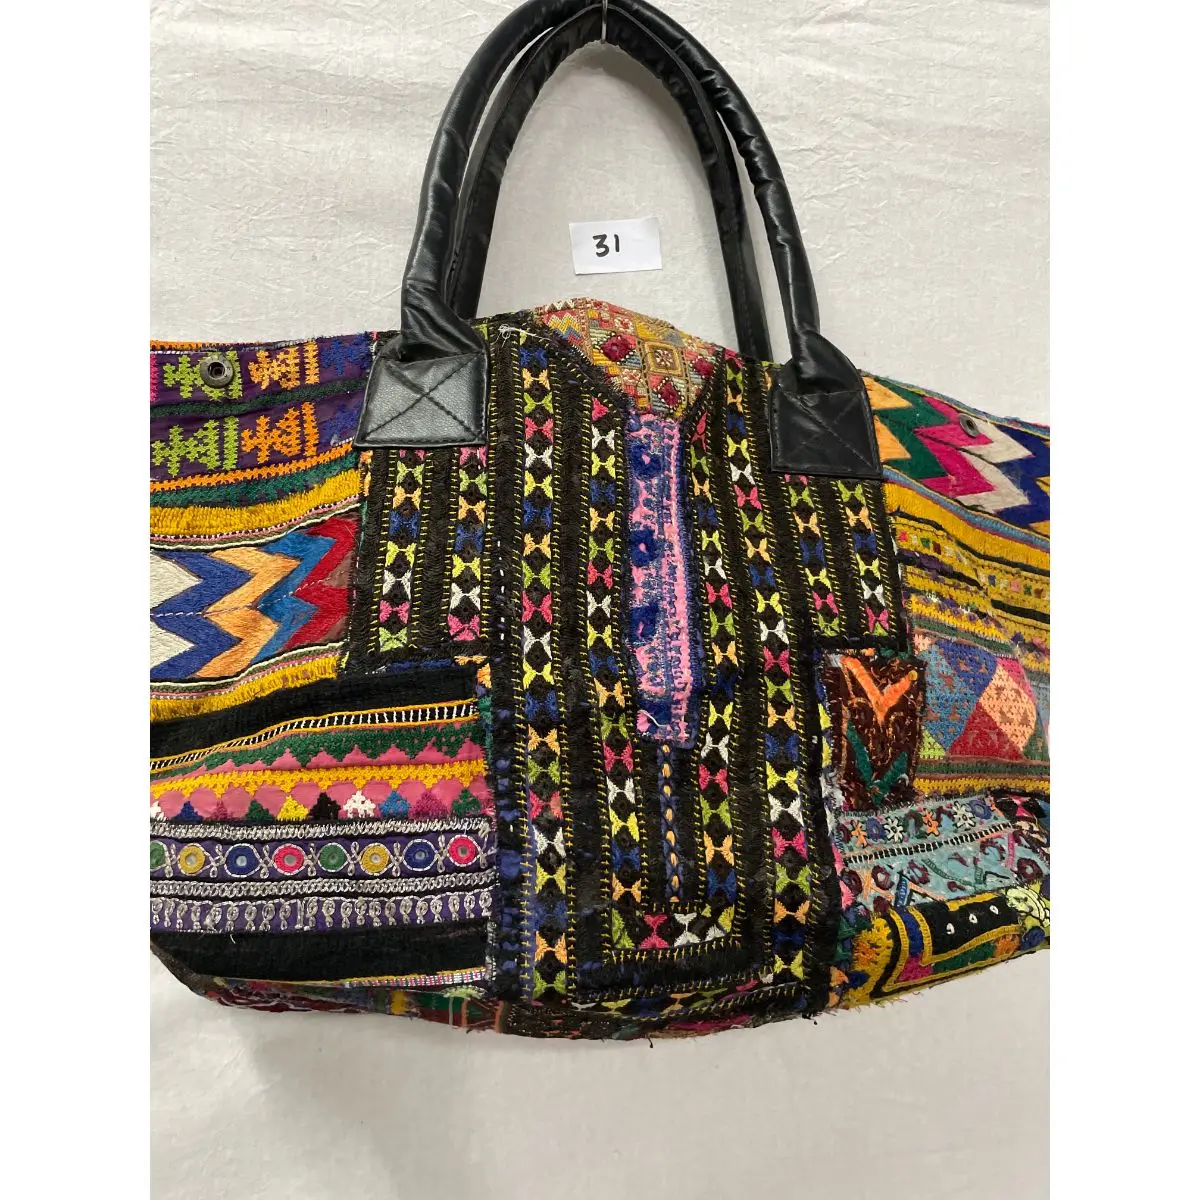 Large embroidered black leather bag, Banjara tote bag, boho